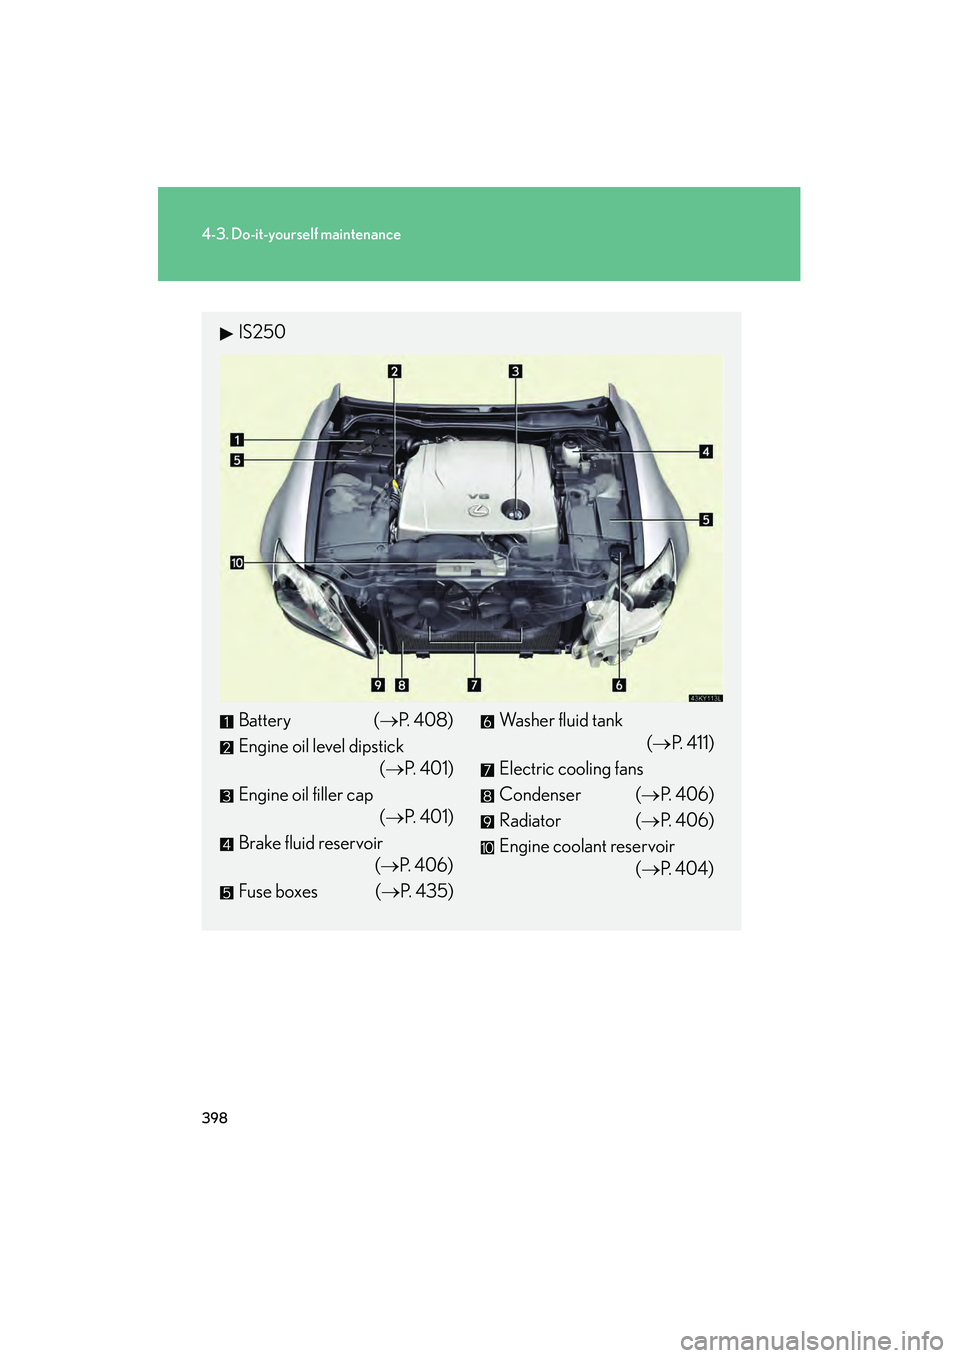 Lexus IS250 2012  Owners Manual 398
4-3. Do-it-yourself maintenance
IS350/250_U
IS250
Battery (→P.  4 0 8 )
Engine oil level dipstick (→P.  4 0 1 )
Engine oil filler cap (→P.  4 0 1 )
Brake fluid reservoir (→P.  4 0 6 )
Fuse